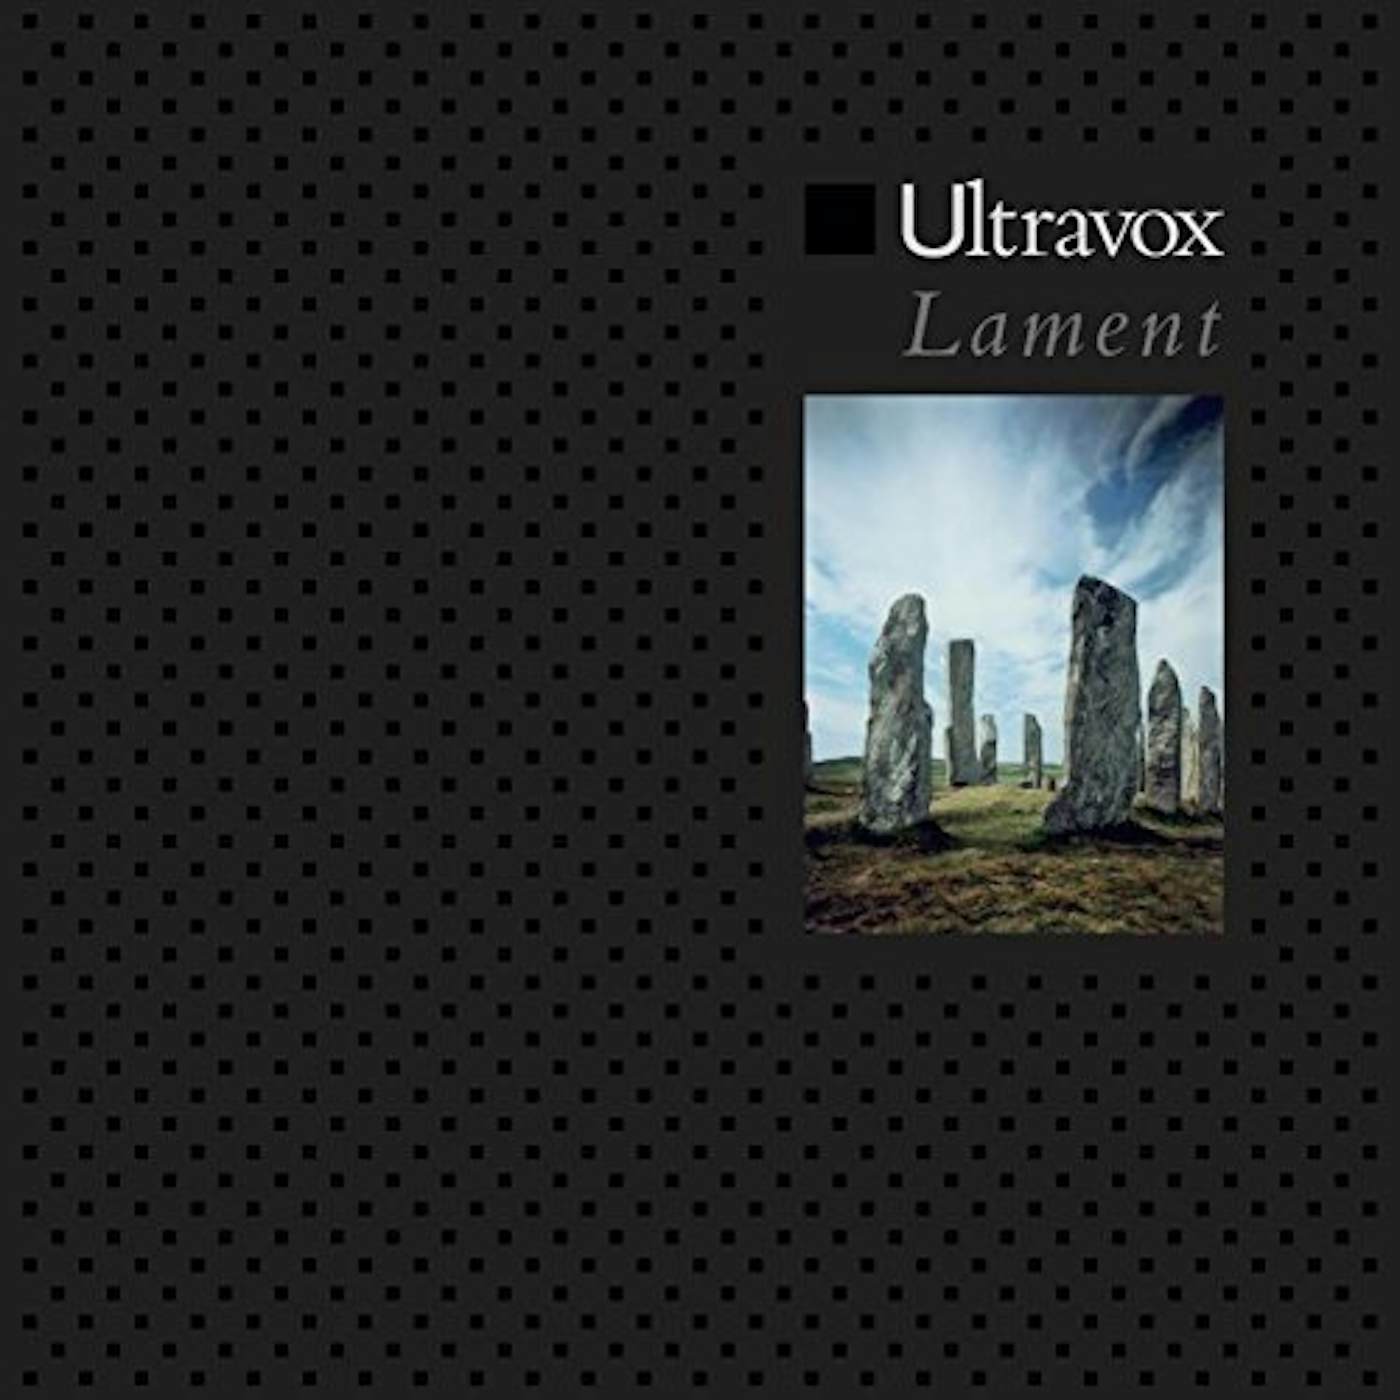 Ultravox Lament Vinyl Record